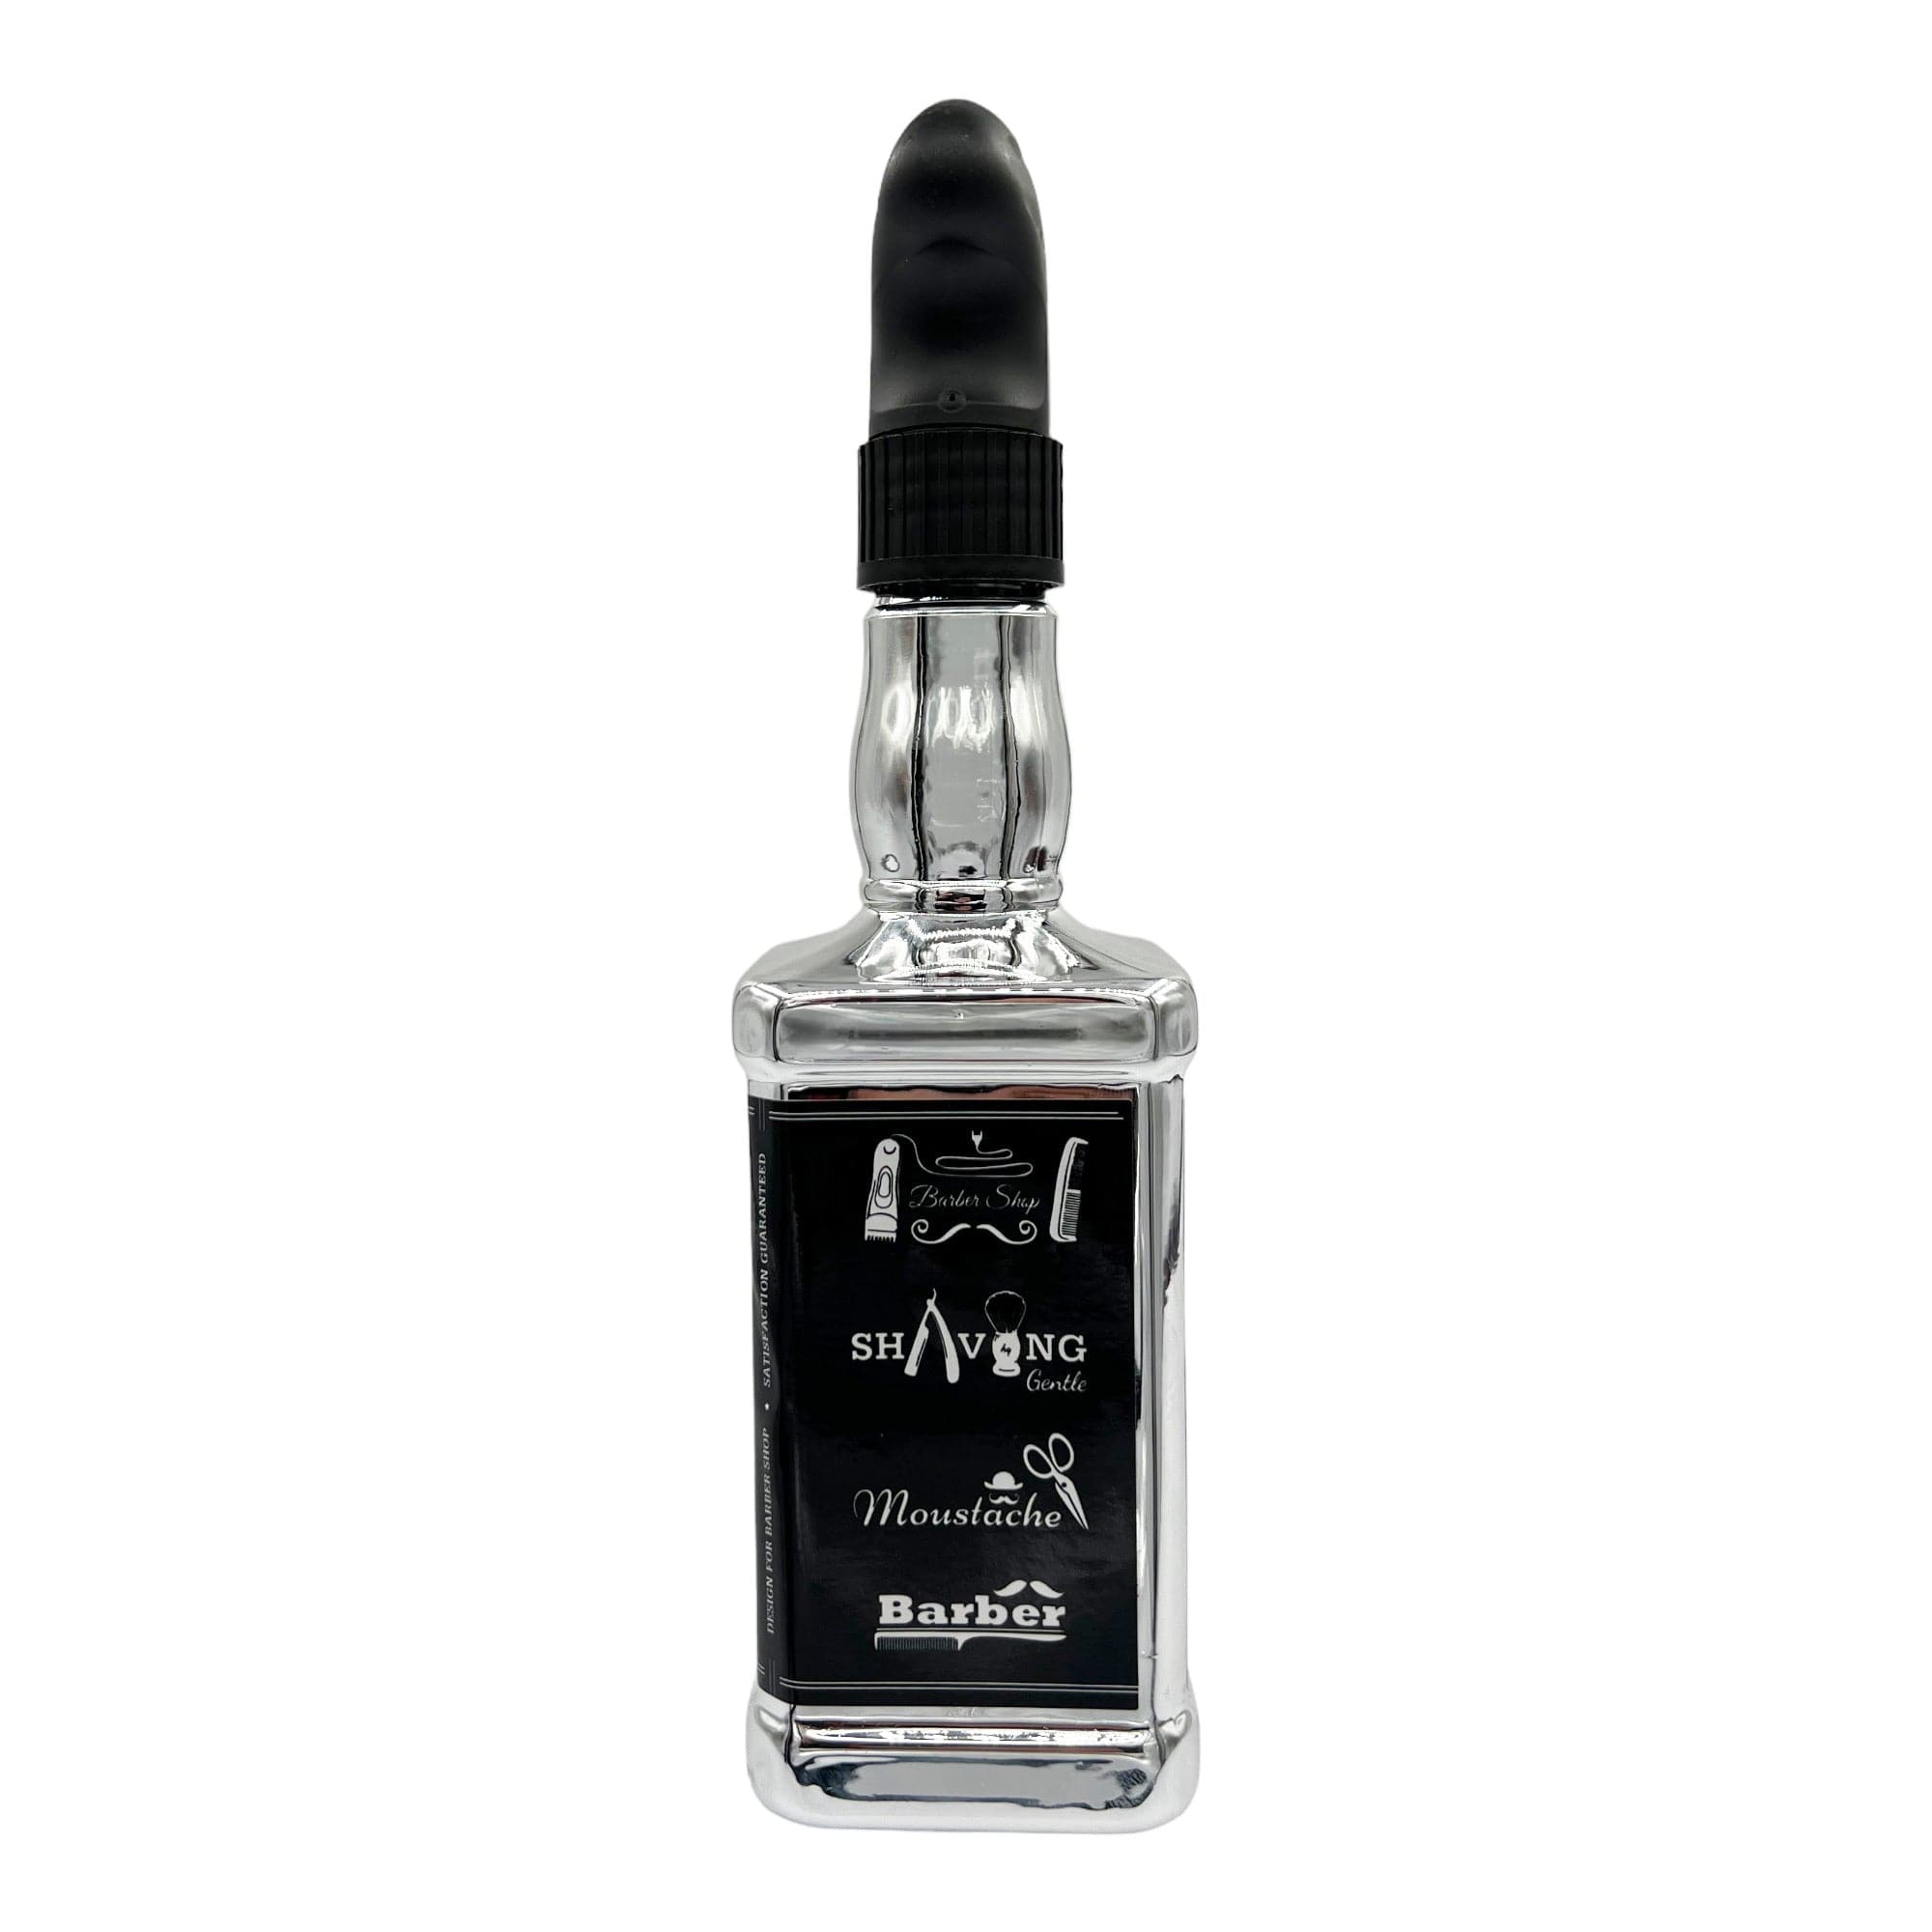 Eson - Water Spray Bottle 500ml Empty Refillable Ultra Fine Mist Sprayer (Silver)